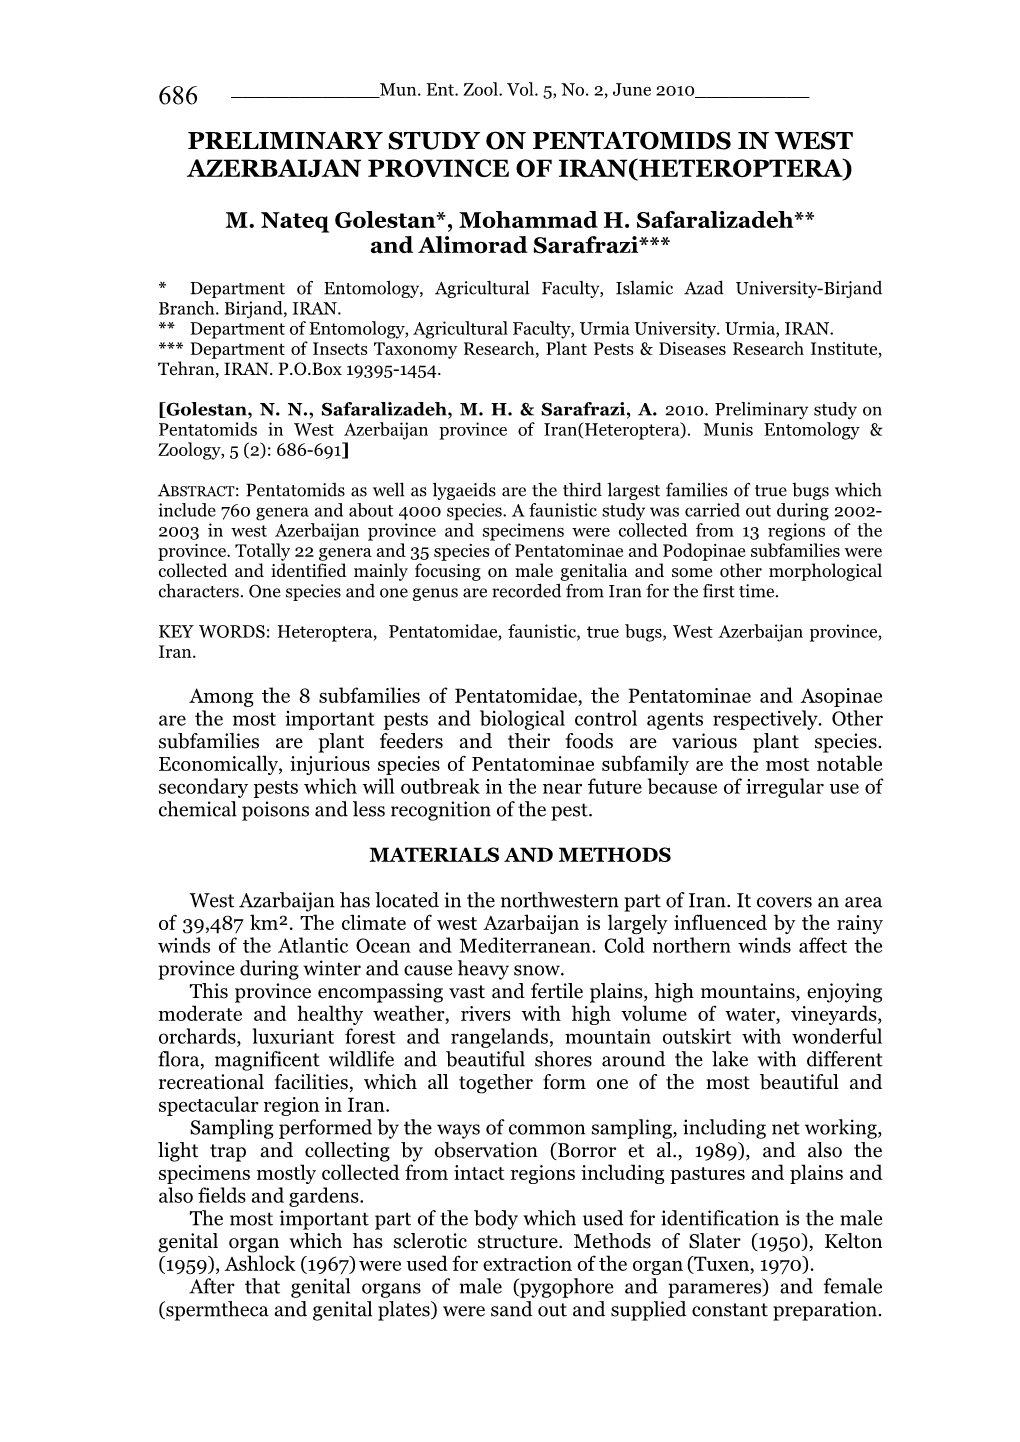 Preliminary Study on Pentatomids in West Azerbaijan Province of Iran(Heteroptera)